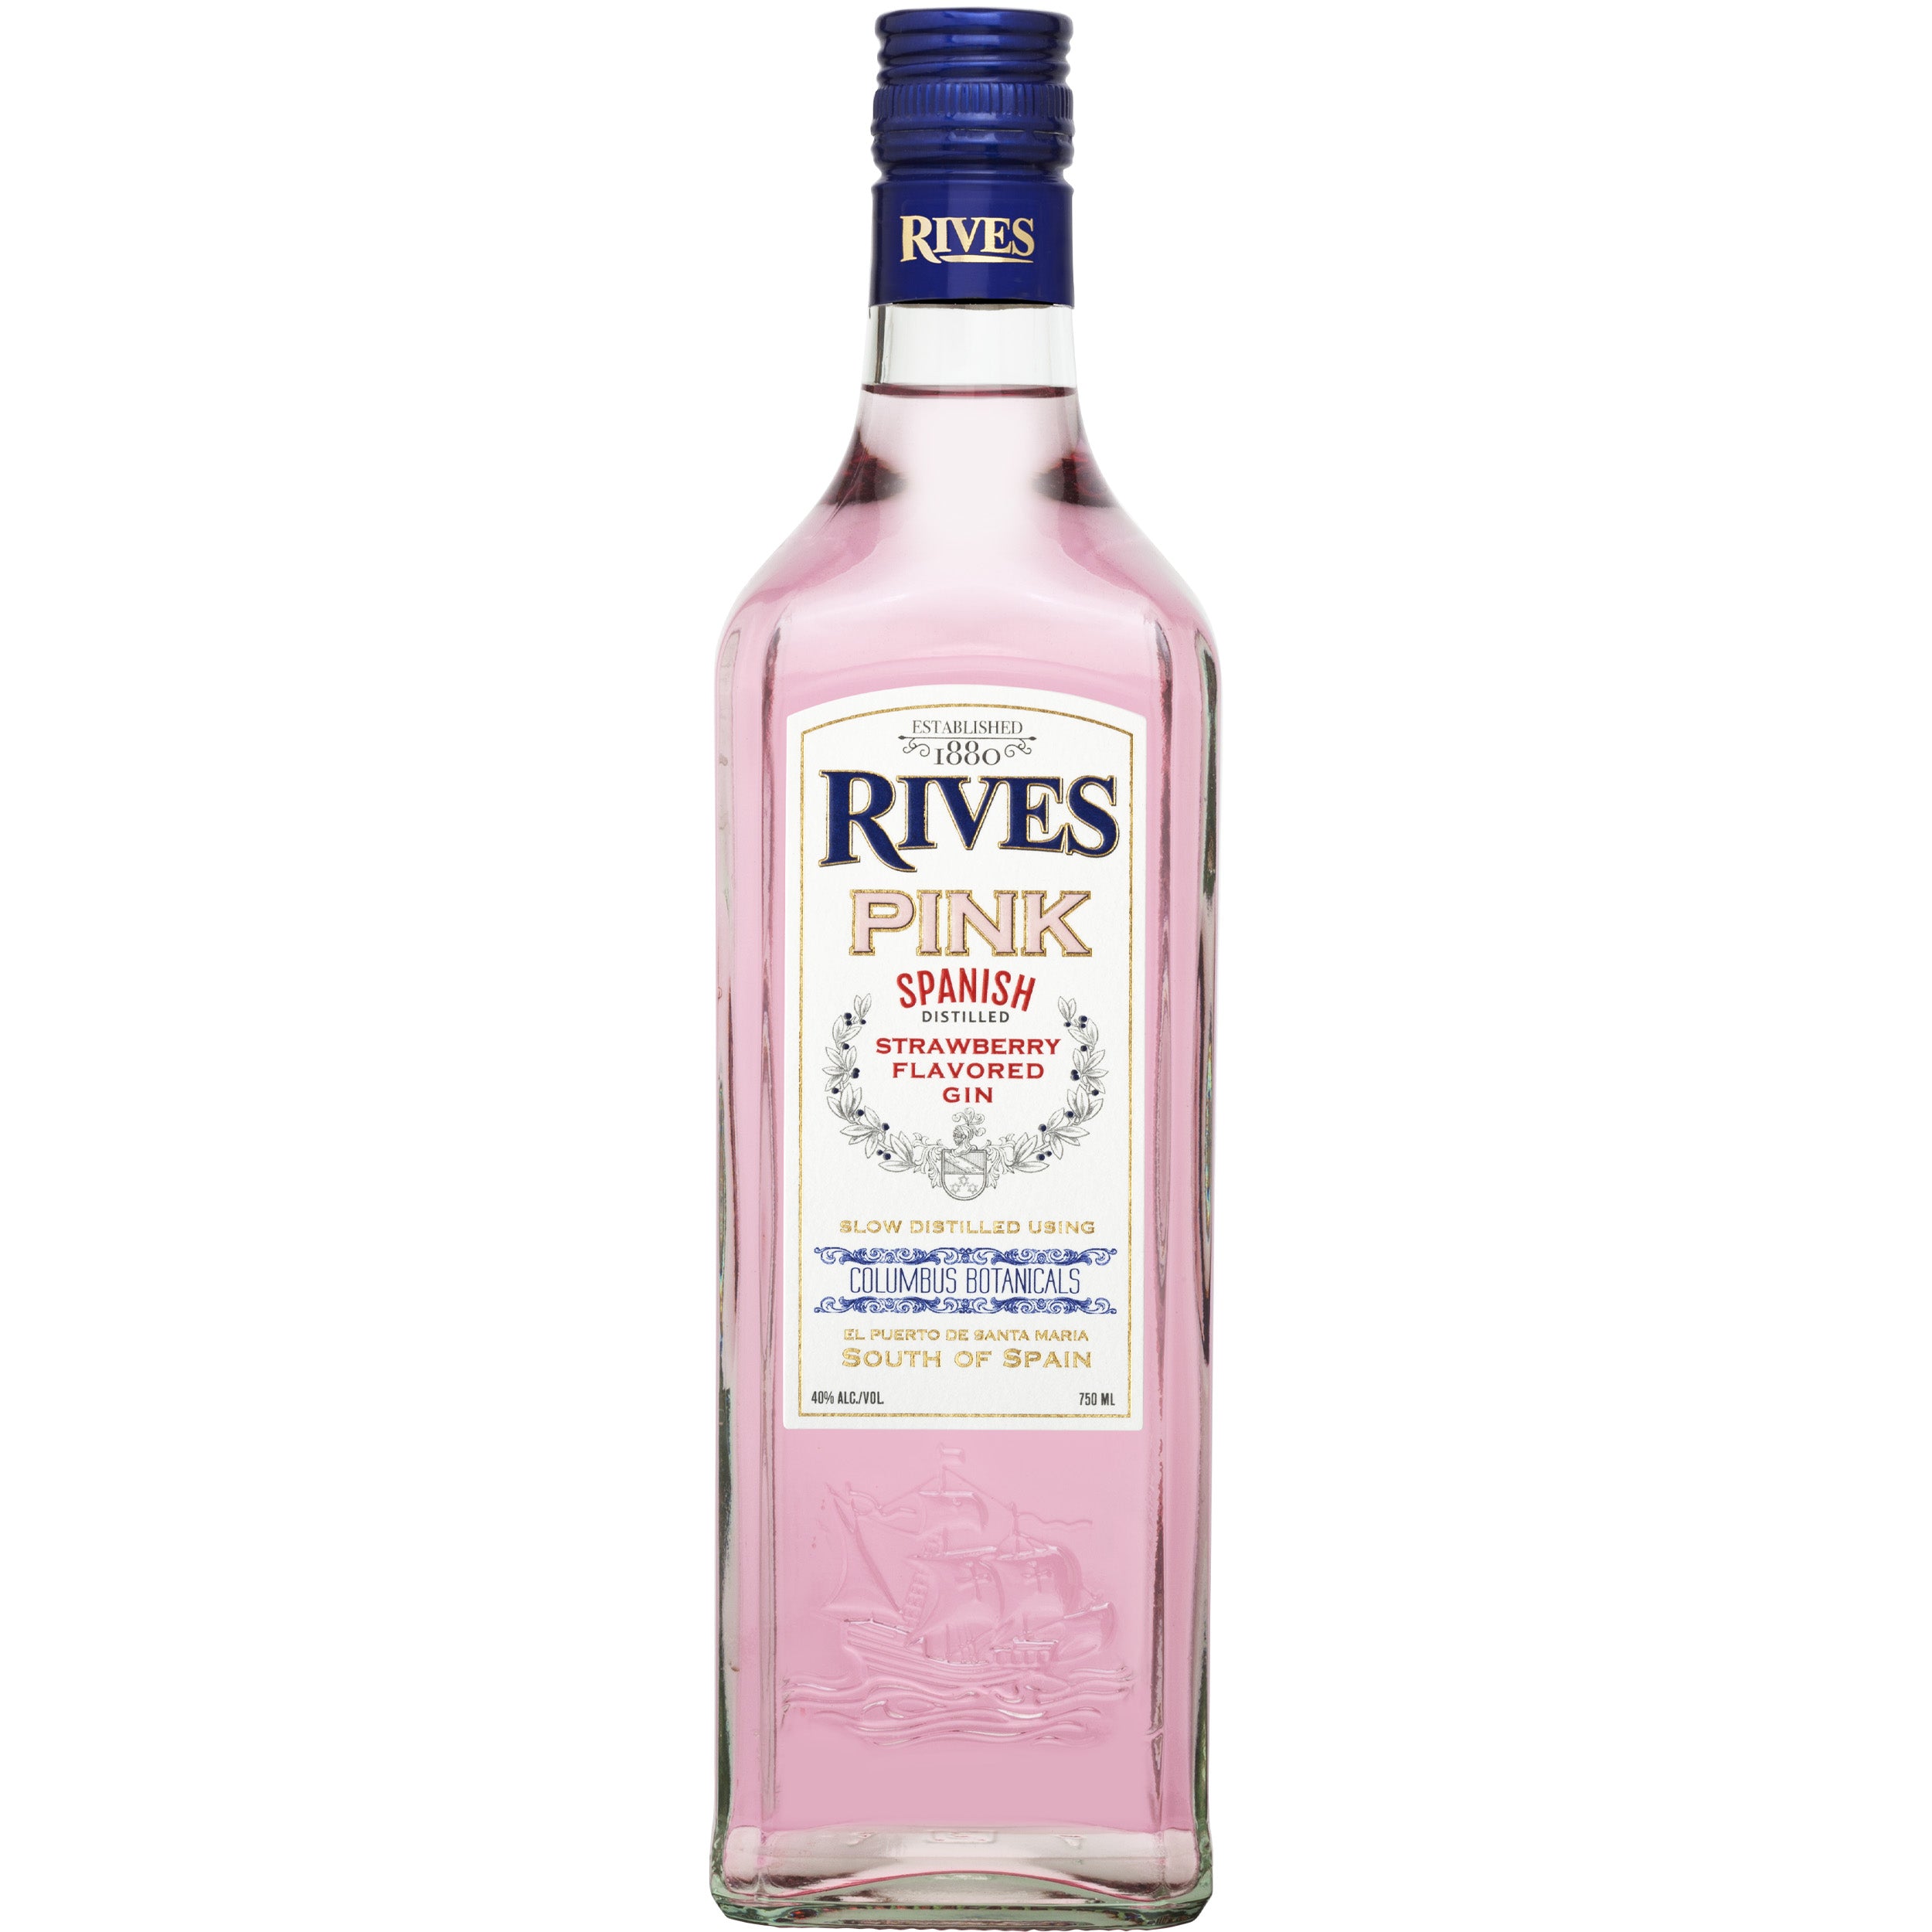 Liquor – Spanish Chips Pink Rives Gin